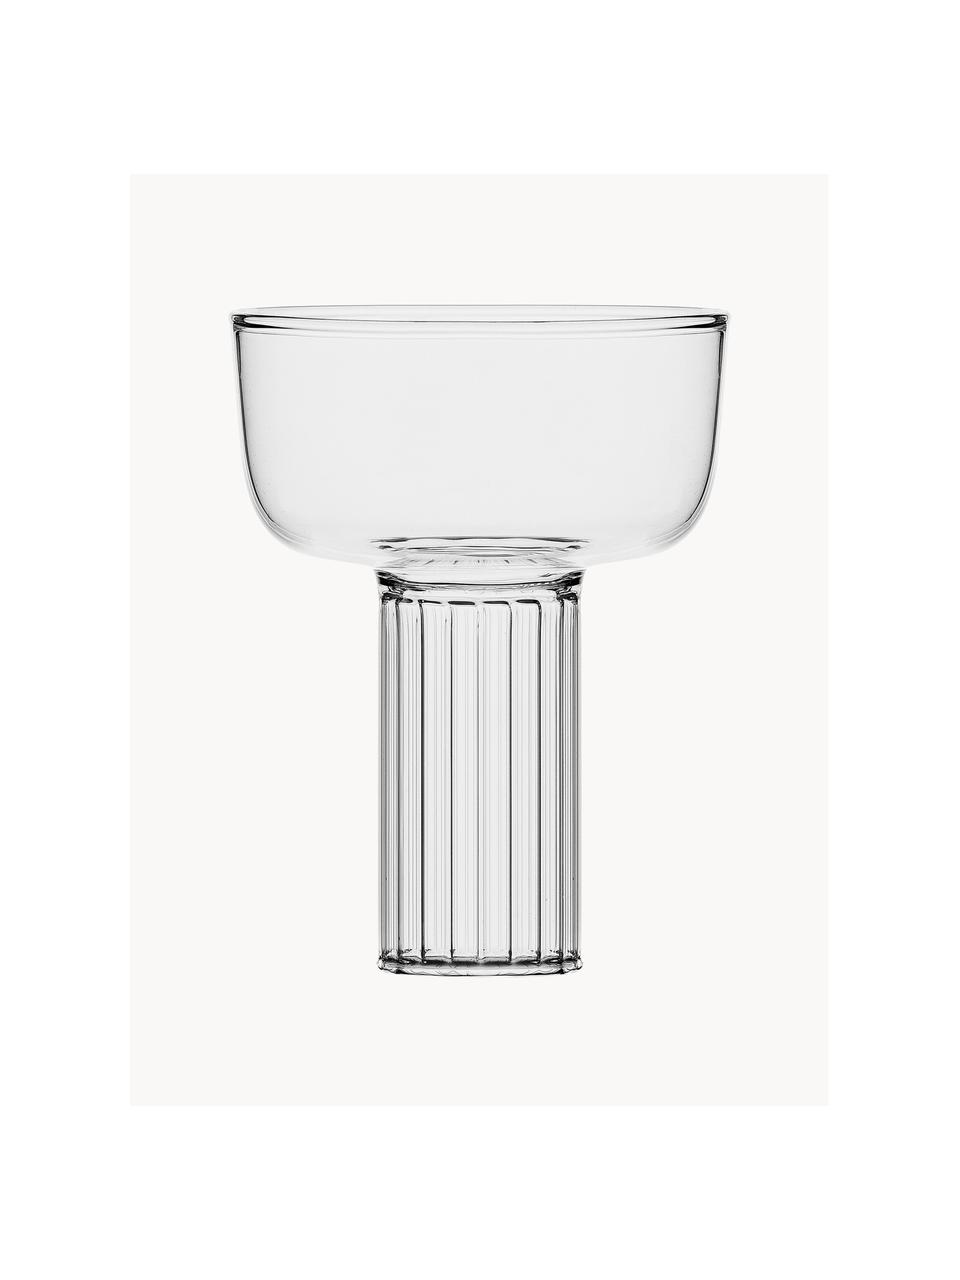 Handgefertigte Champagnerschale Liberta, Borosilikatglas, Transparent, Ø 10 x H 12 cm, 280 ml